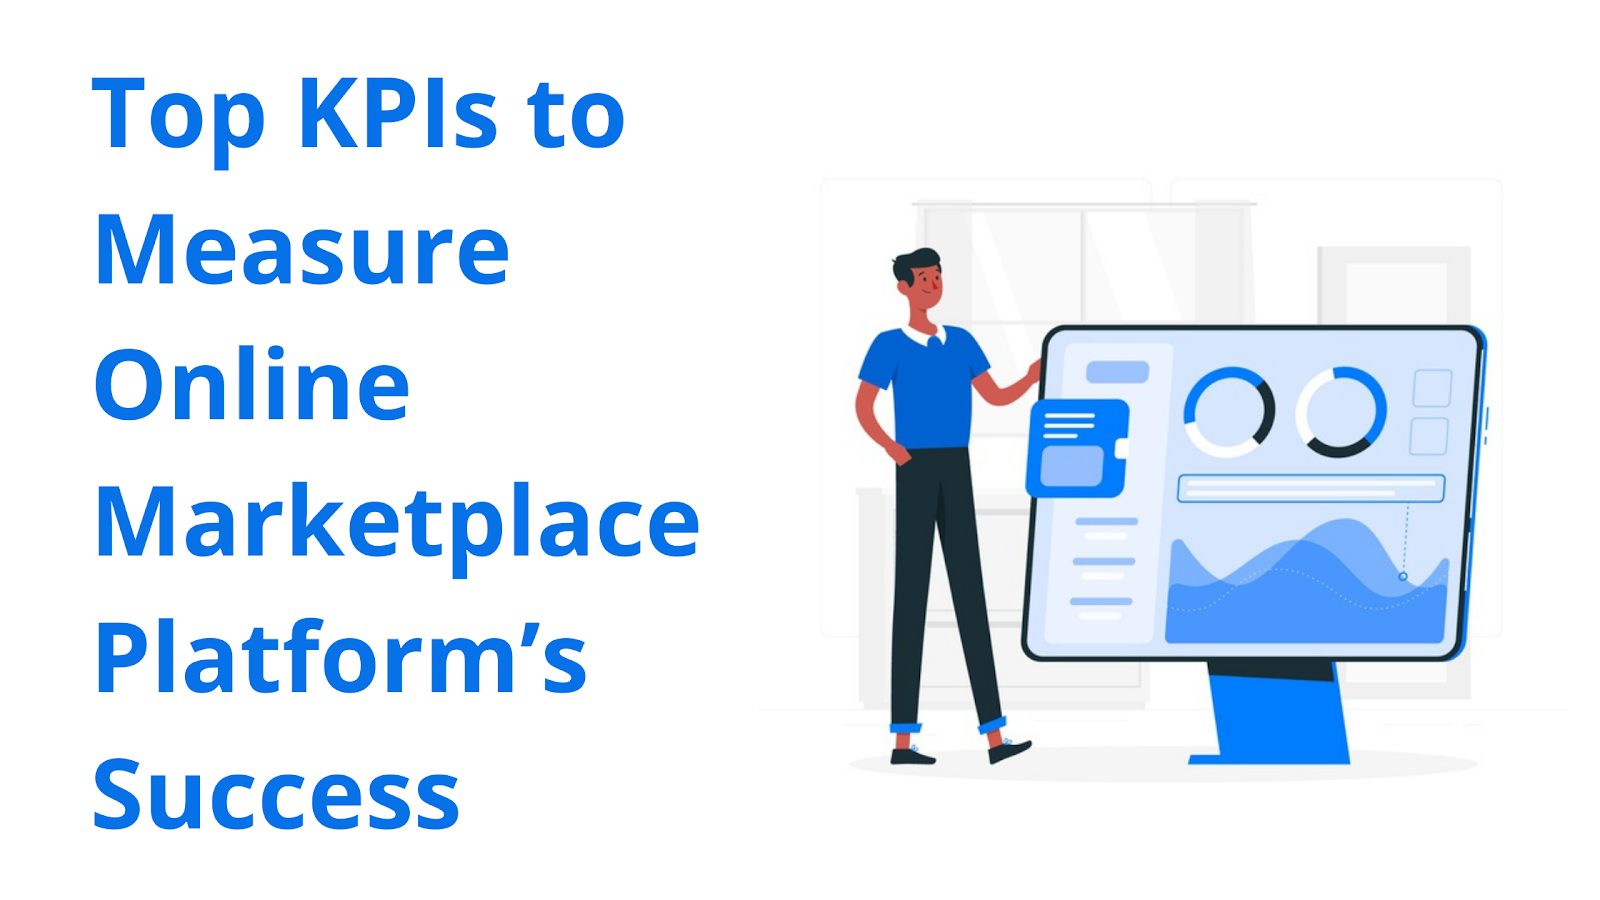 Top KPIs to Measure Online Marketplace Platform’s Success